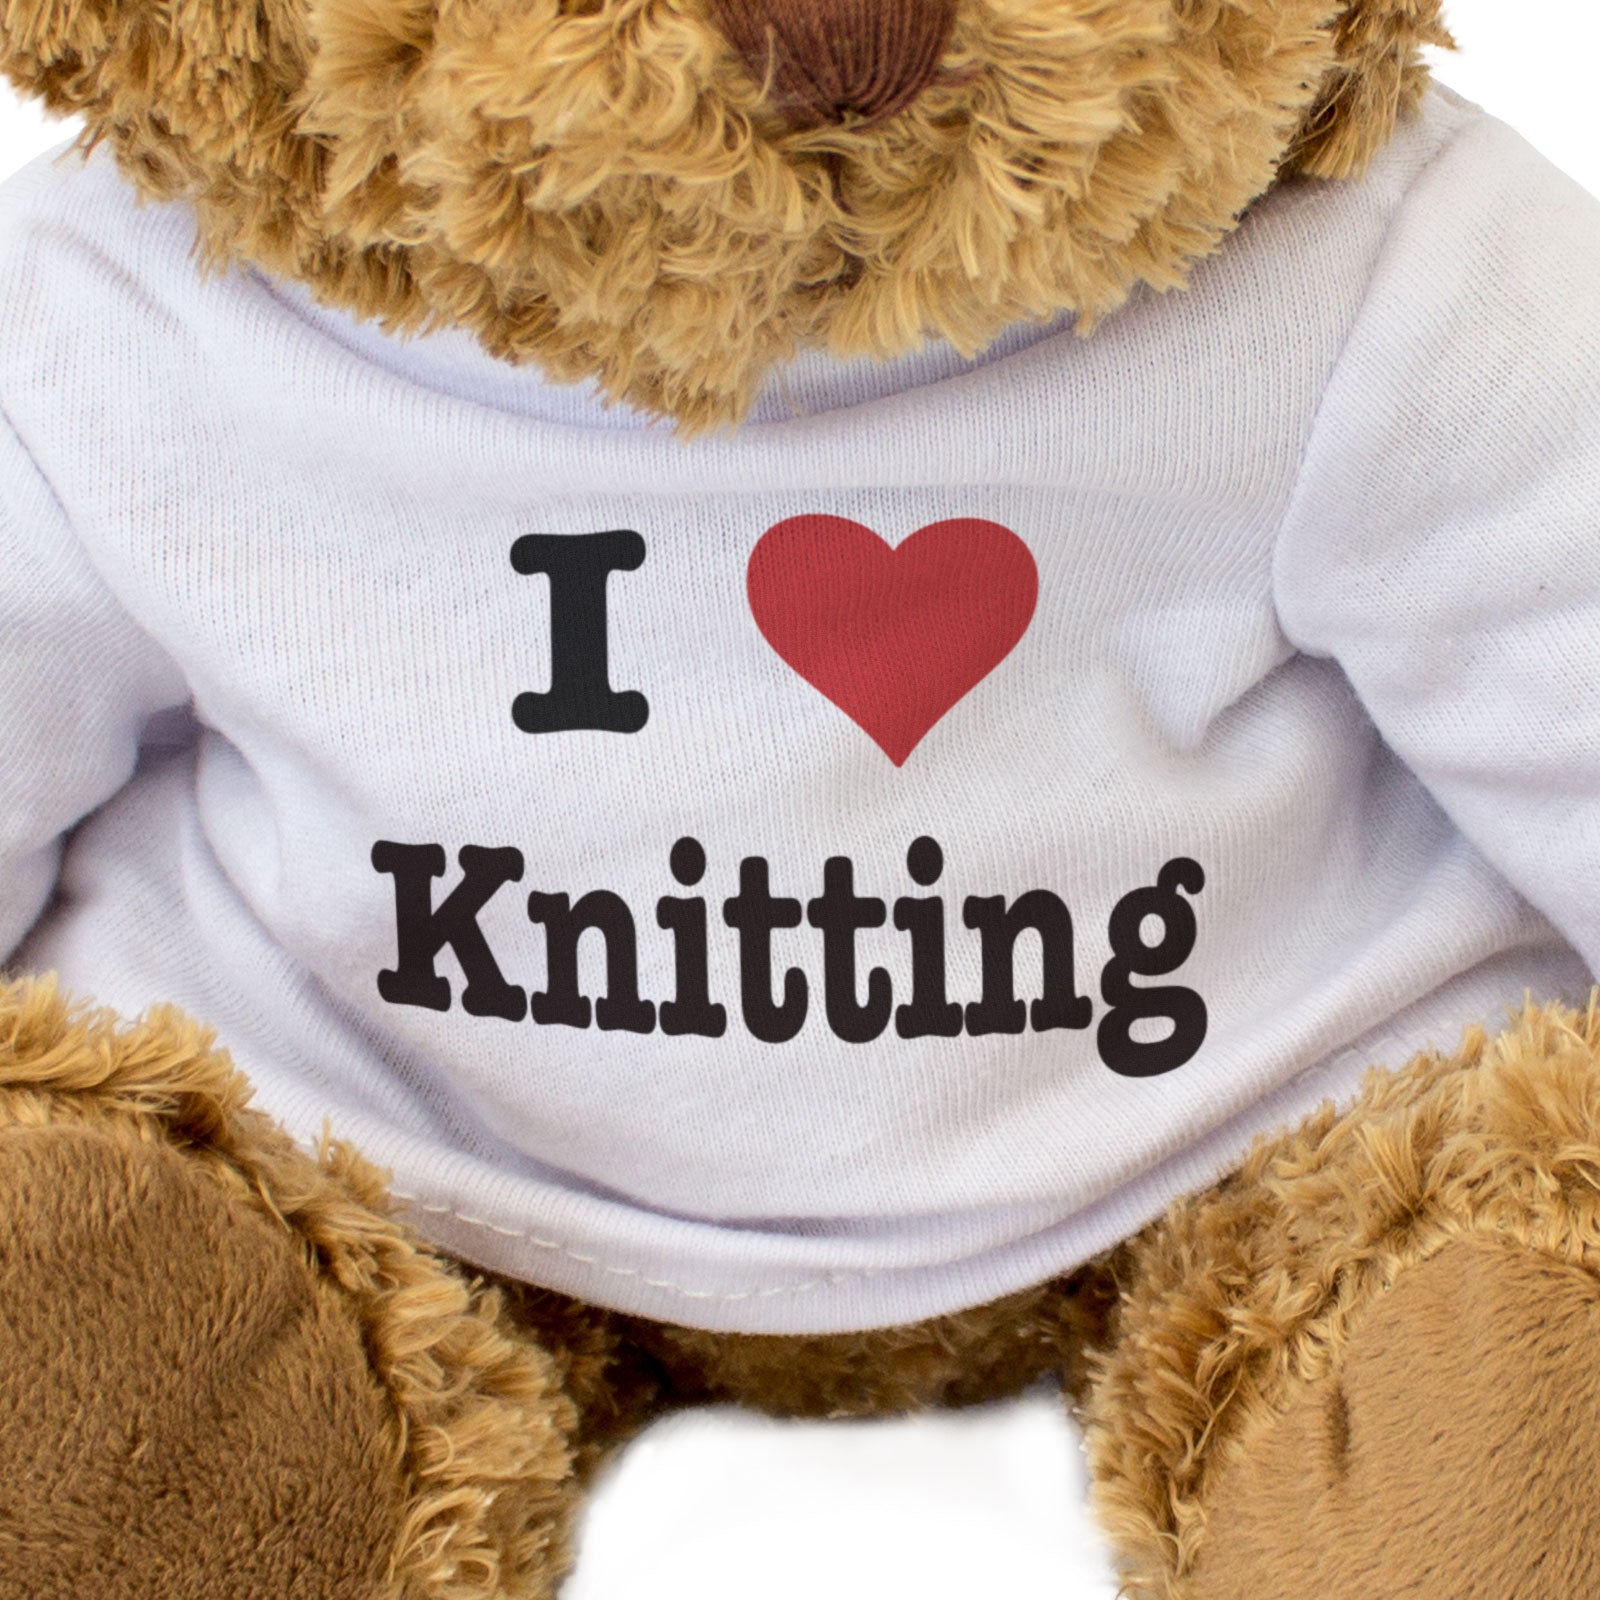 I Love Knitting - Teddy Bear